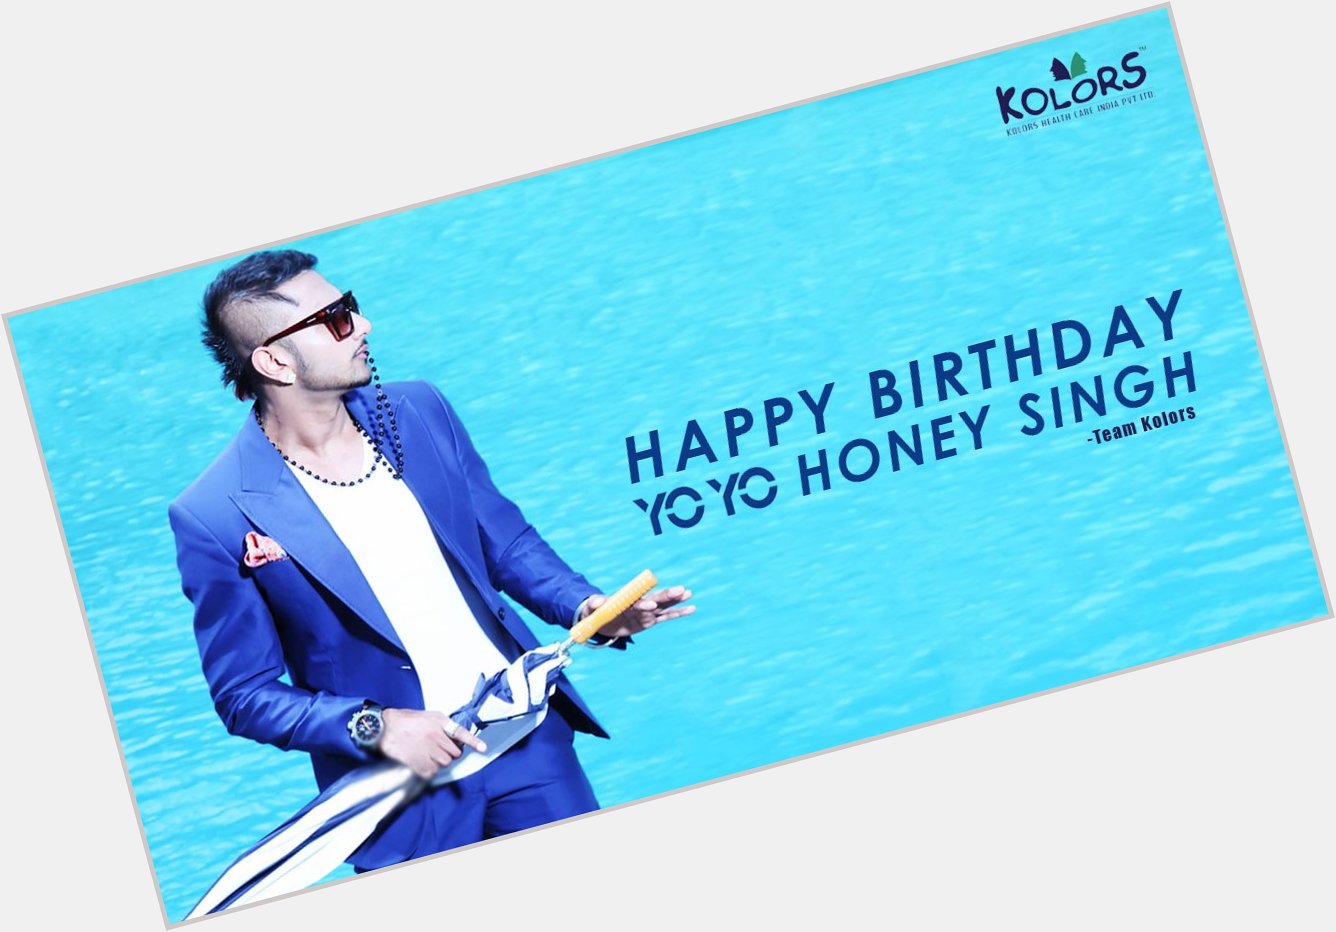 Team Kolors Wishes Honey Singh A Very Happy Birthday.   